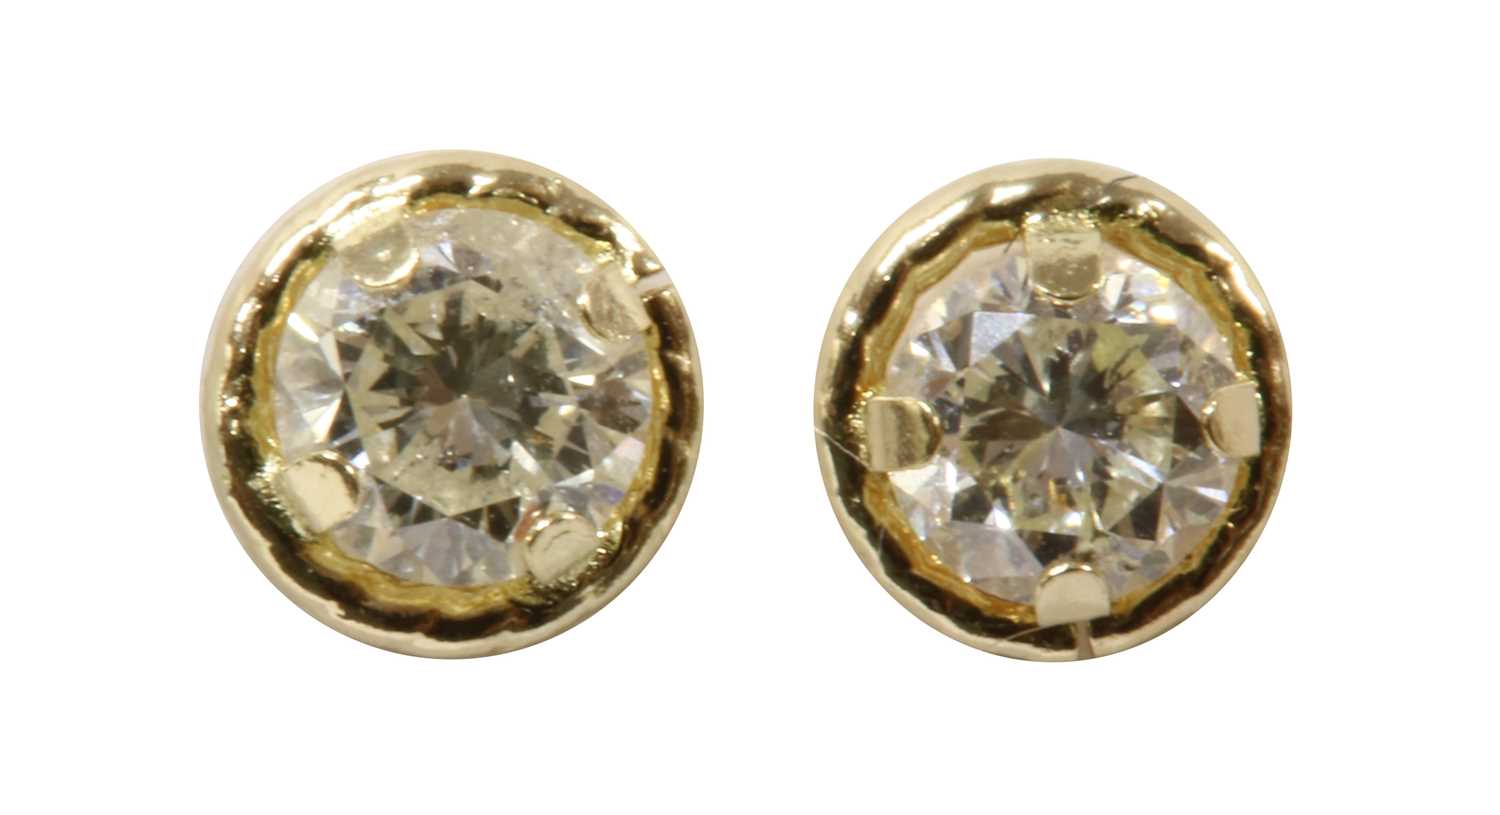 Lot 212 - A pair of gold diamond stud earrings